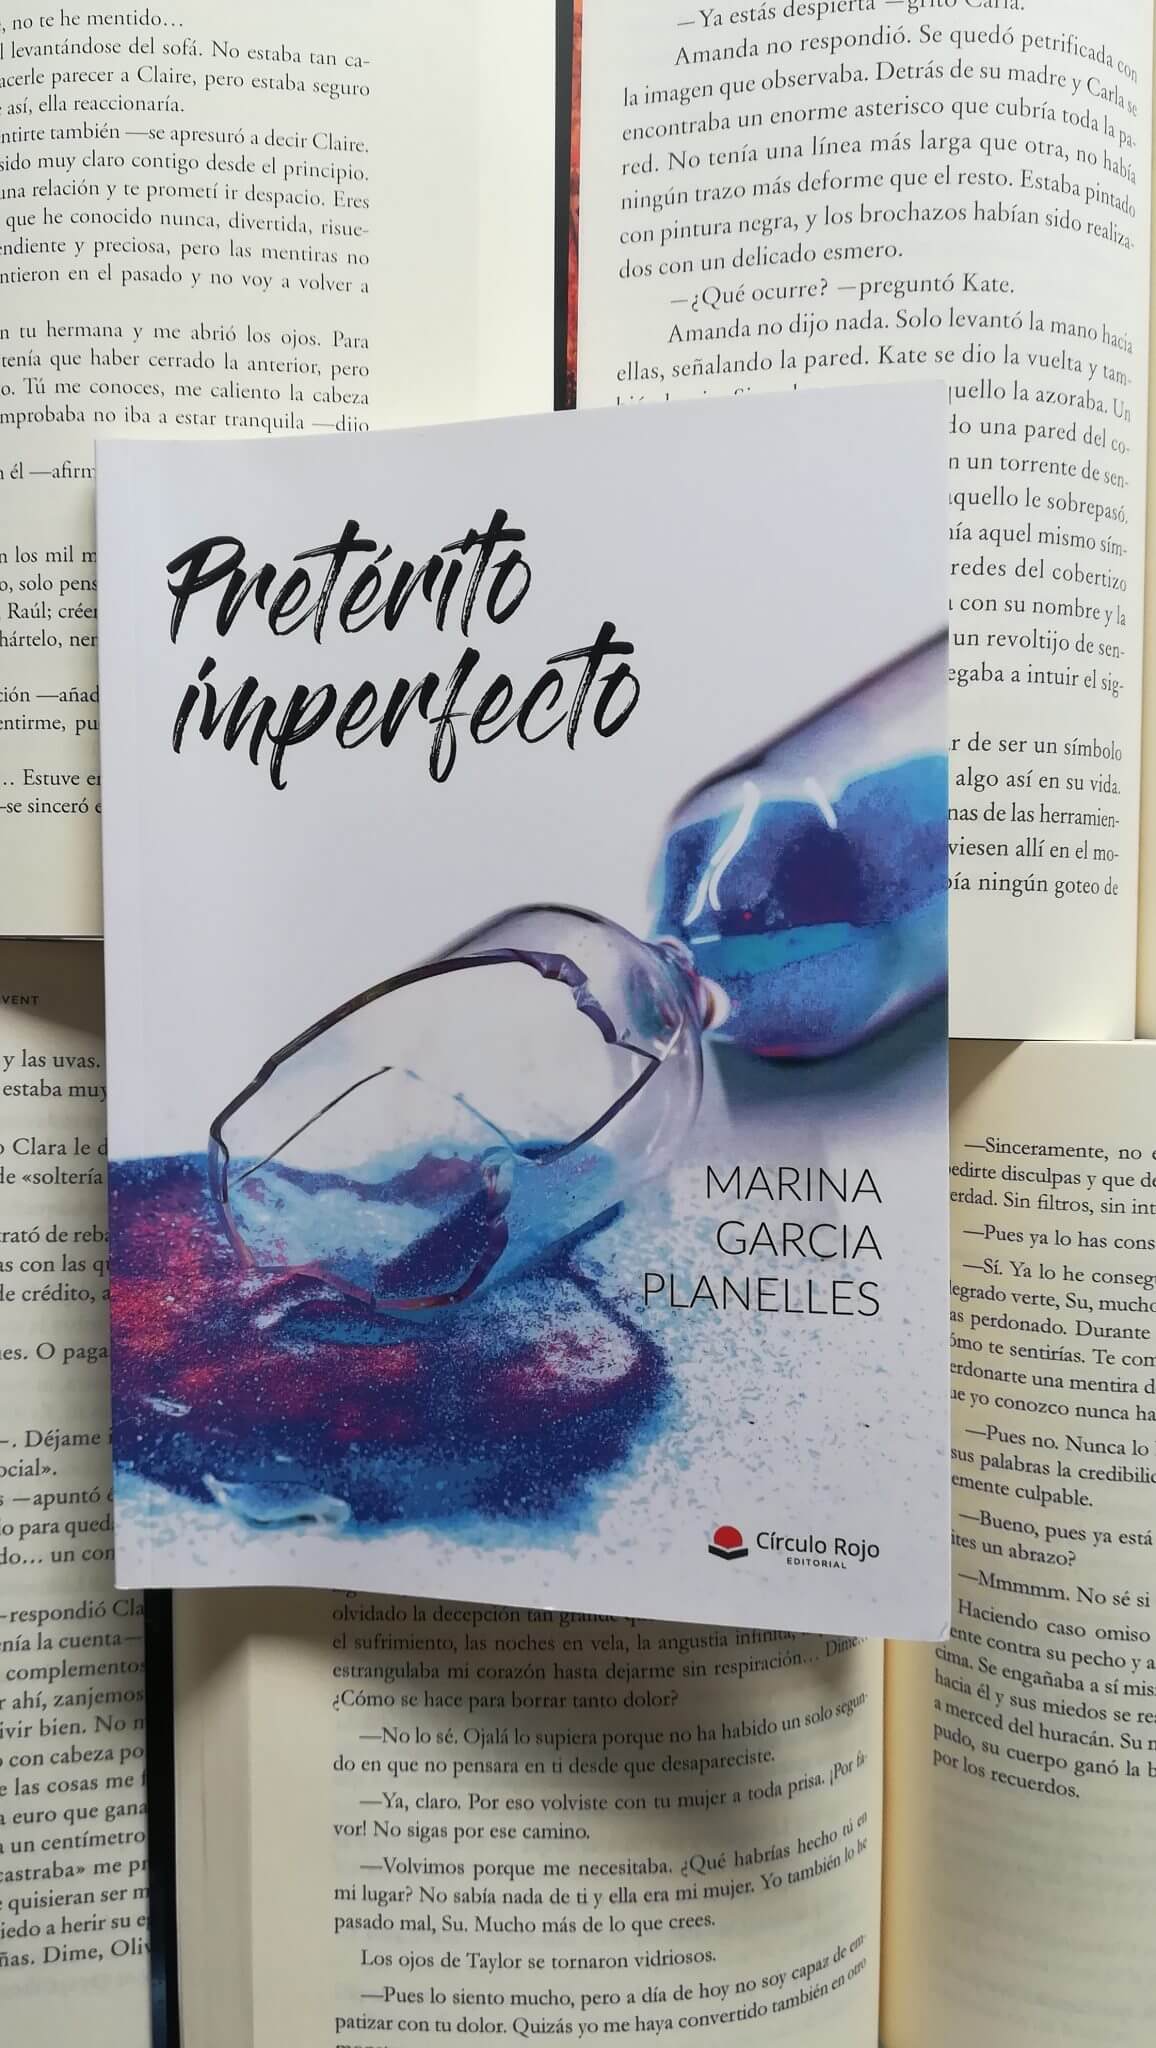 Pretérito imperfecto – Marina García Planelles